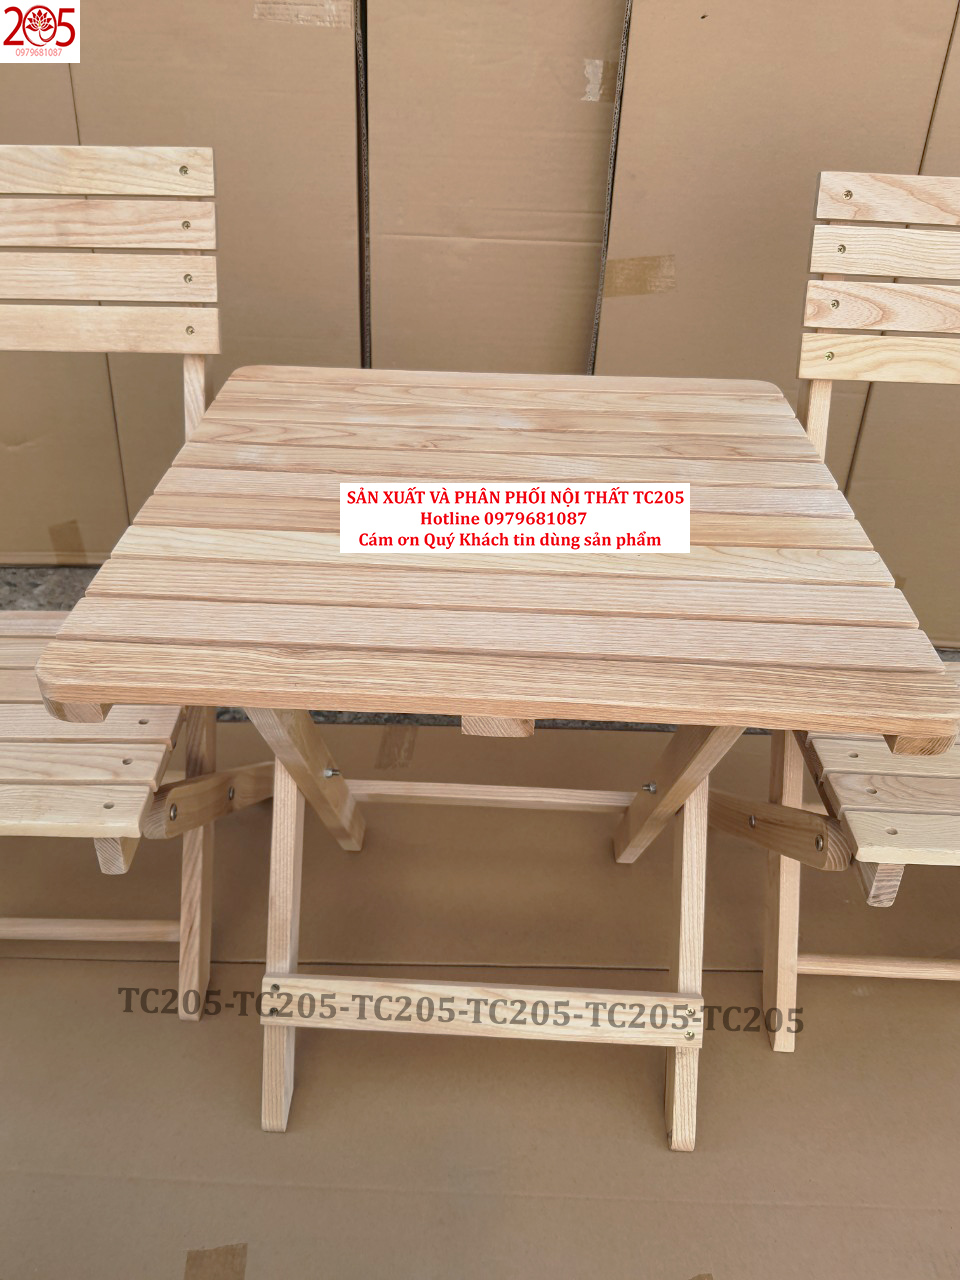 BÀN GHẾ XẾP - bàn 50x50x53cm, ghế 30x30x76cm gỗ tần bì size lớn